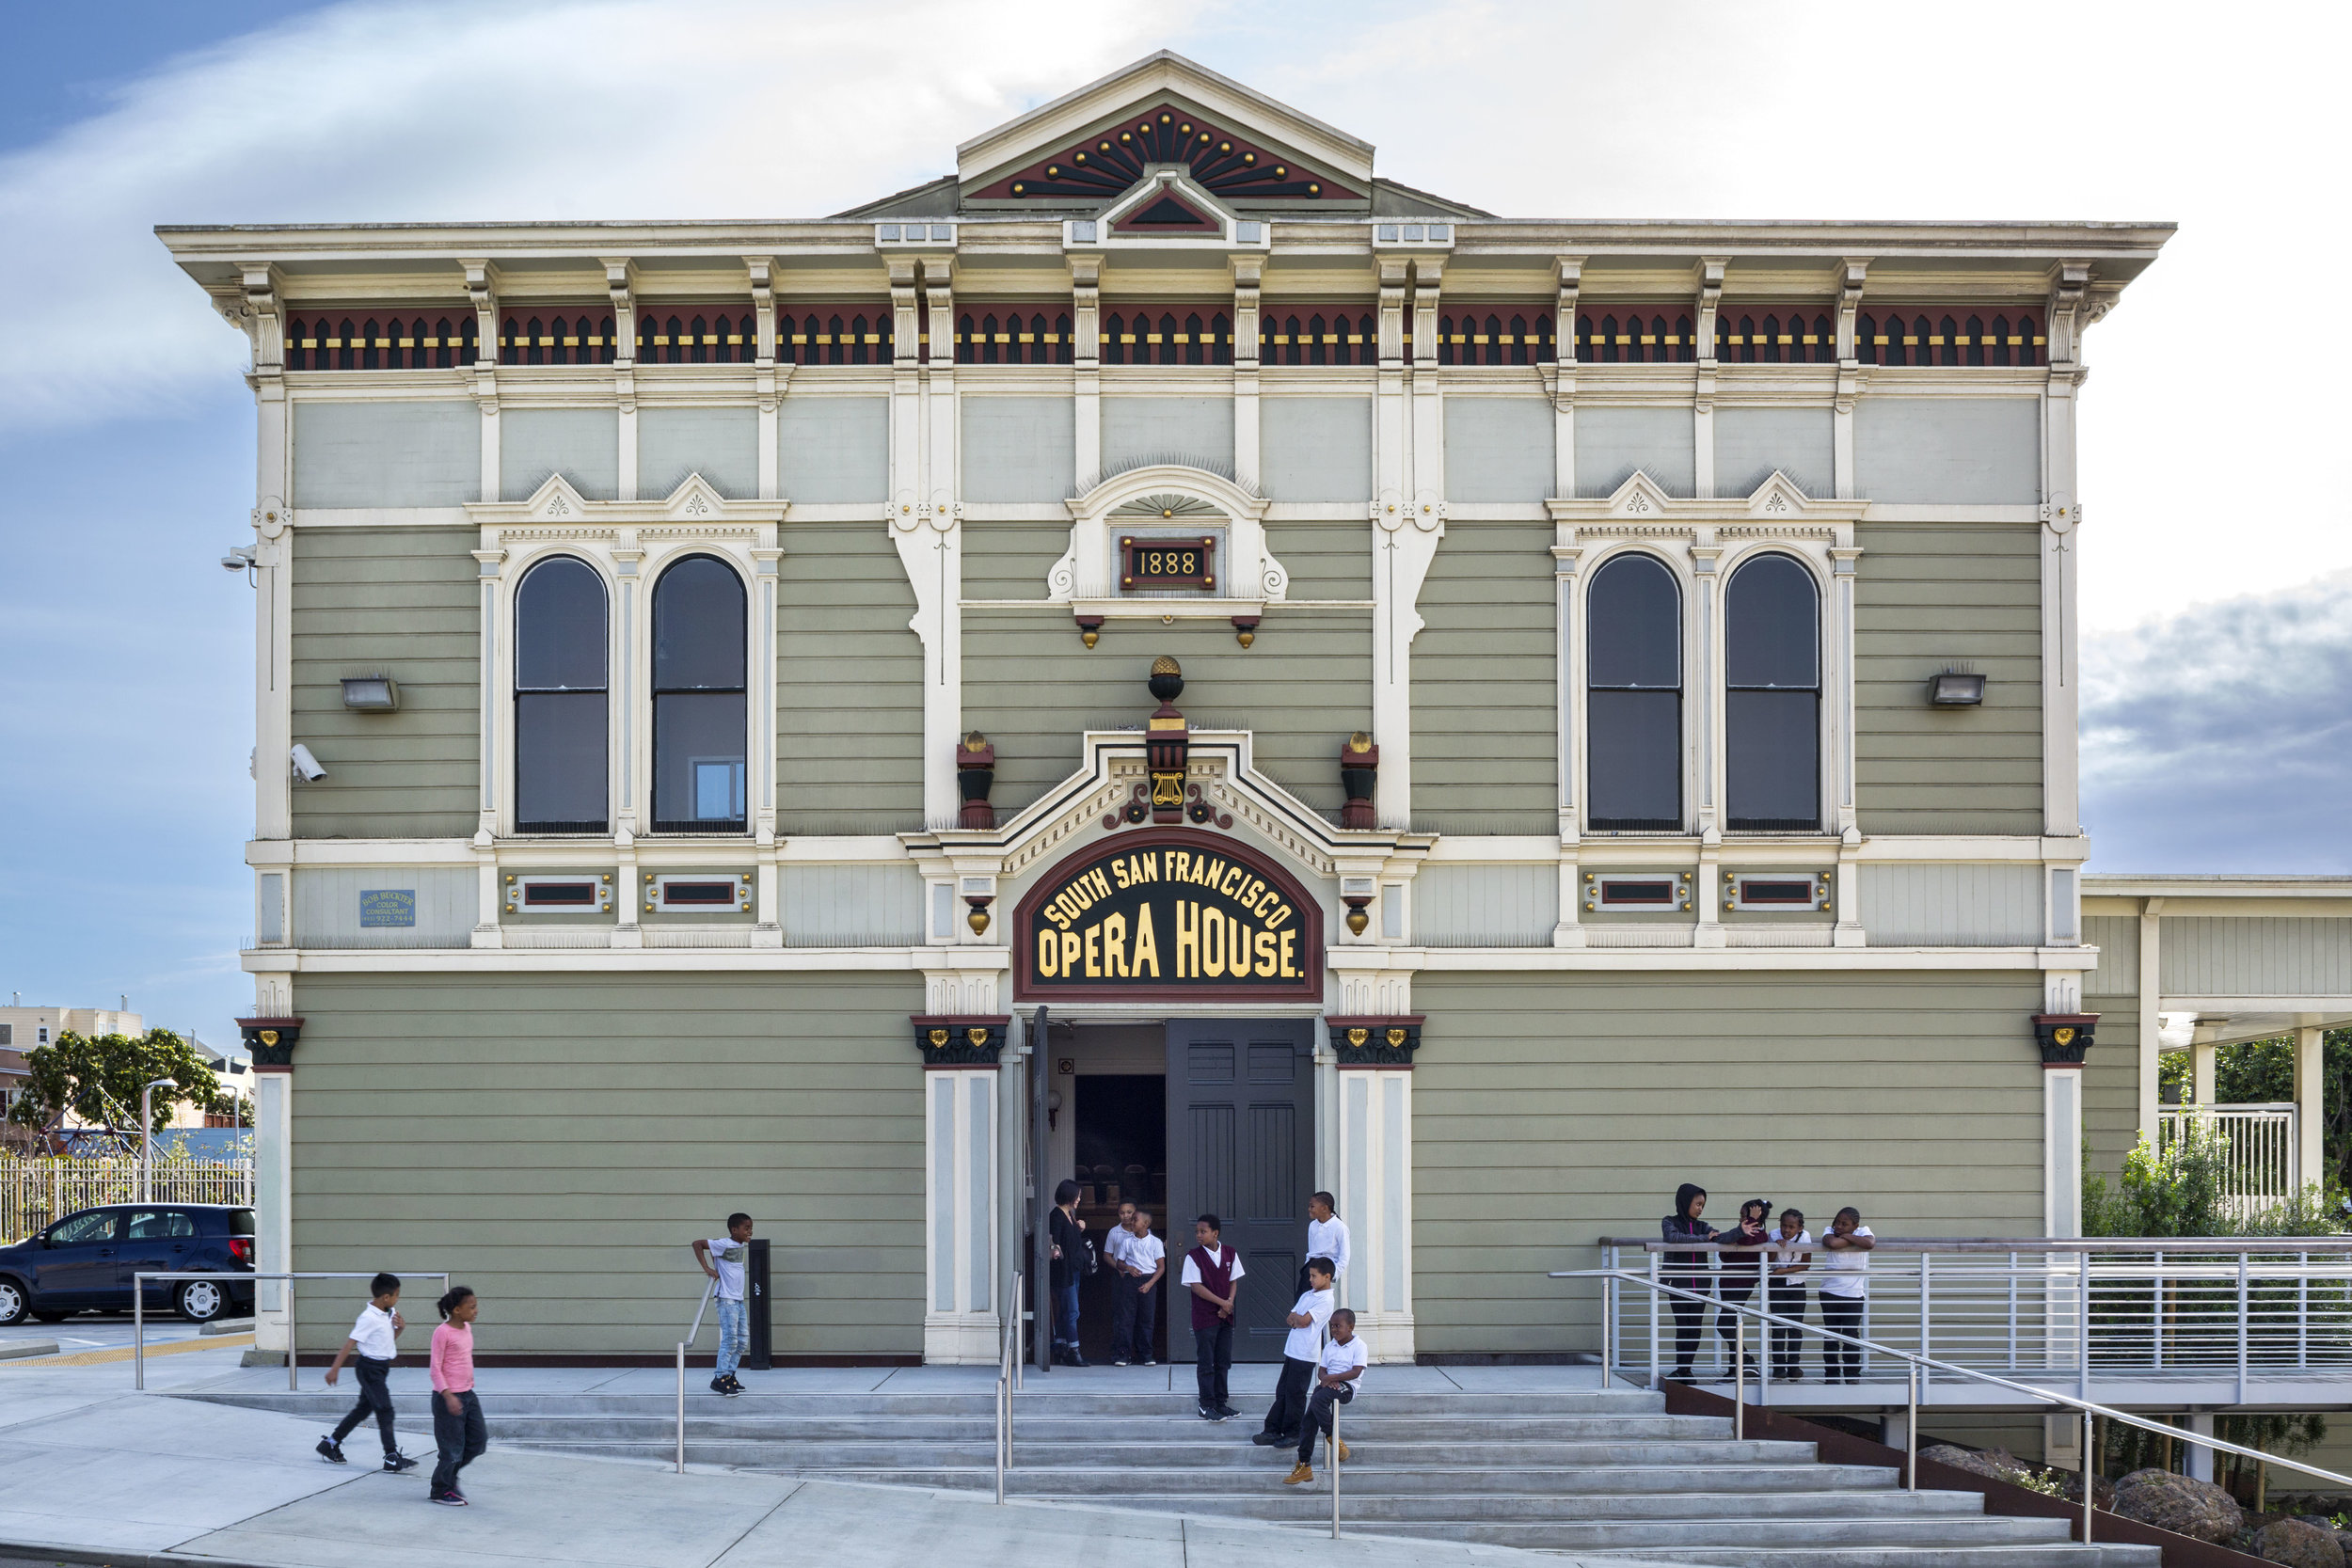  Bayview Opera House  San Francisco, CA  